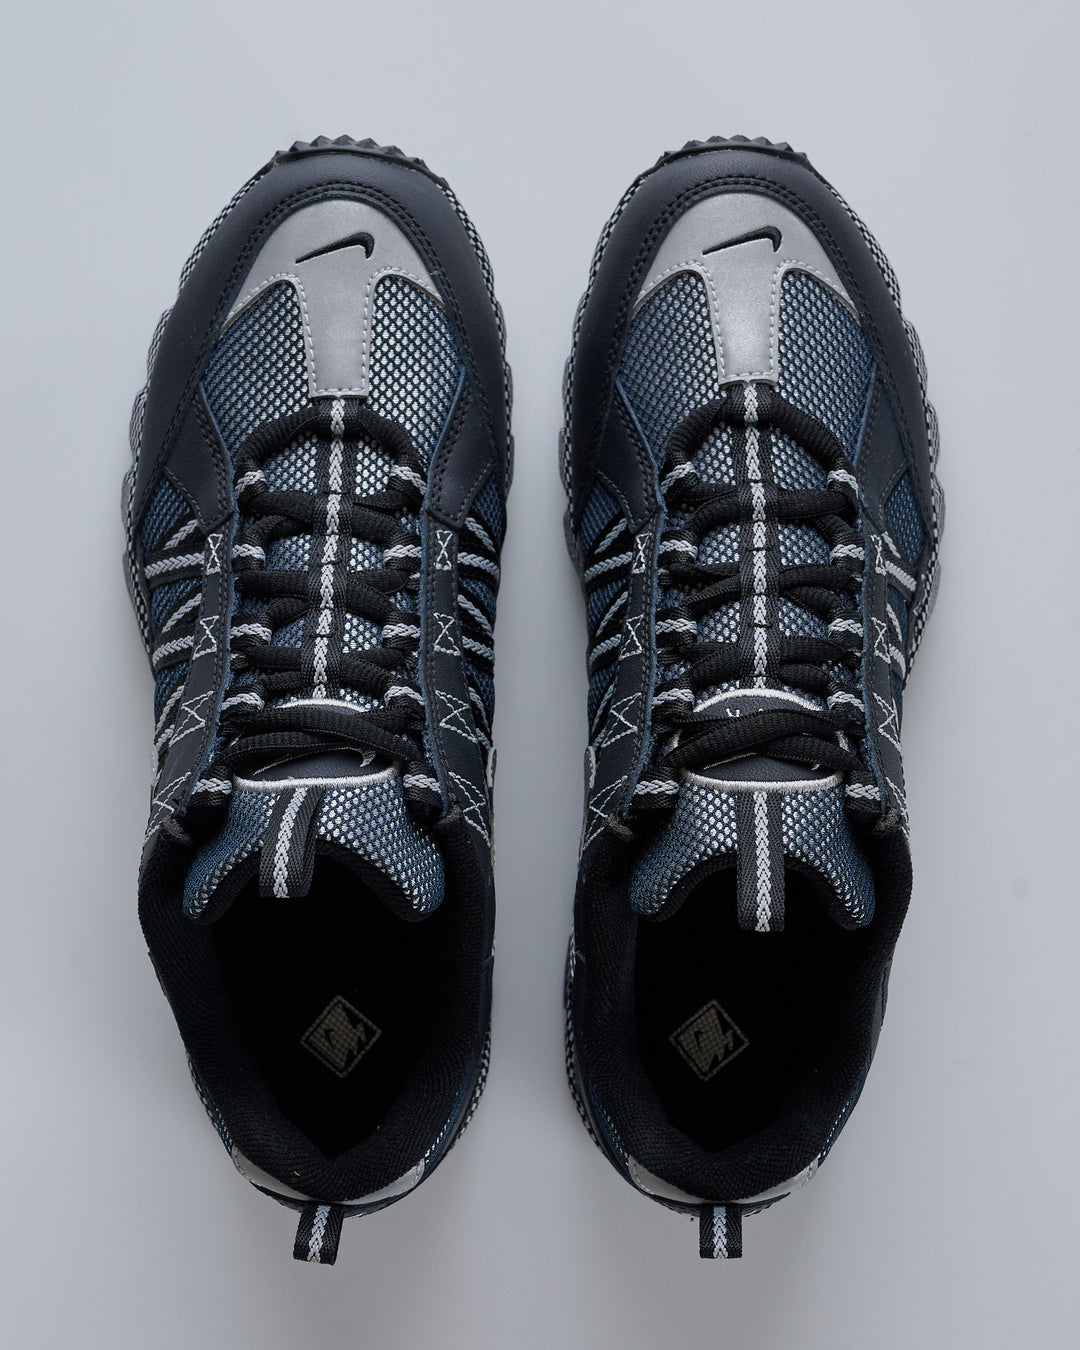 Nike Men's Air Humara Black/Metallic Silver-Metallic Silver